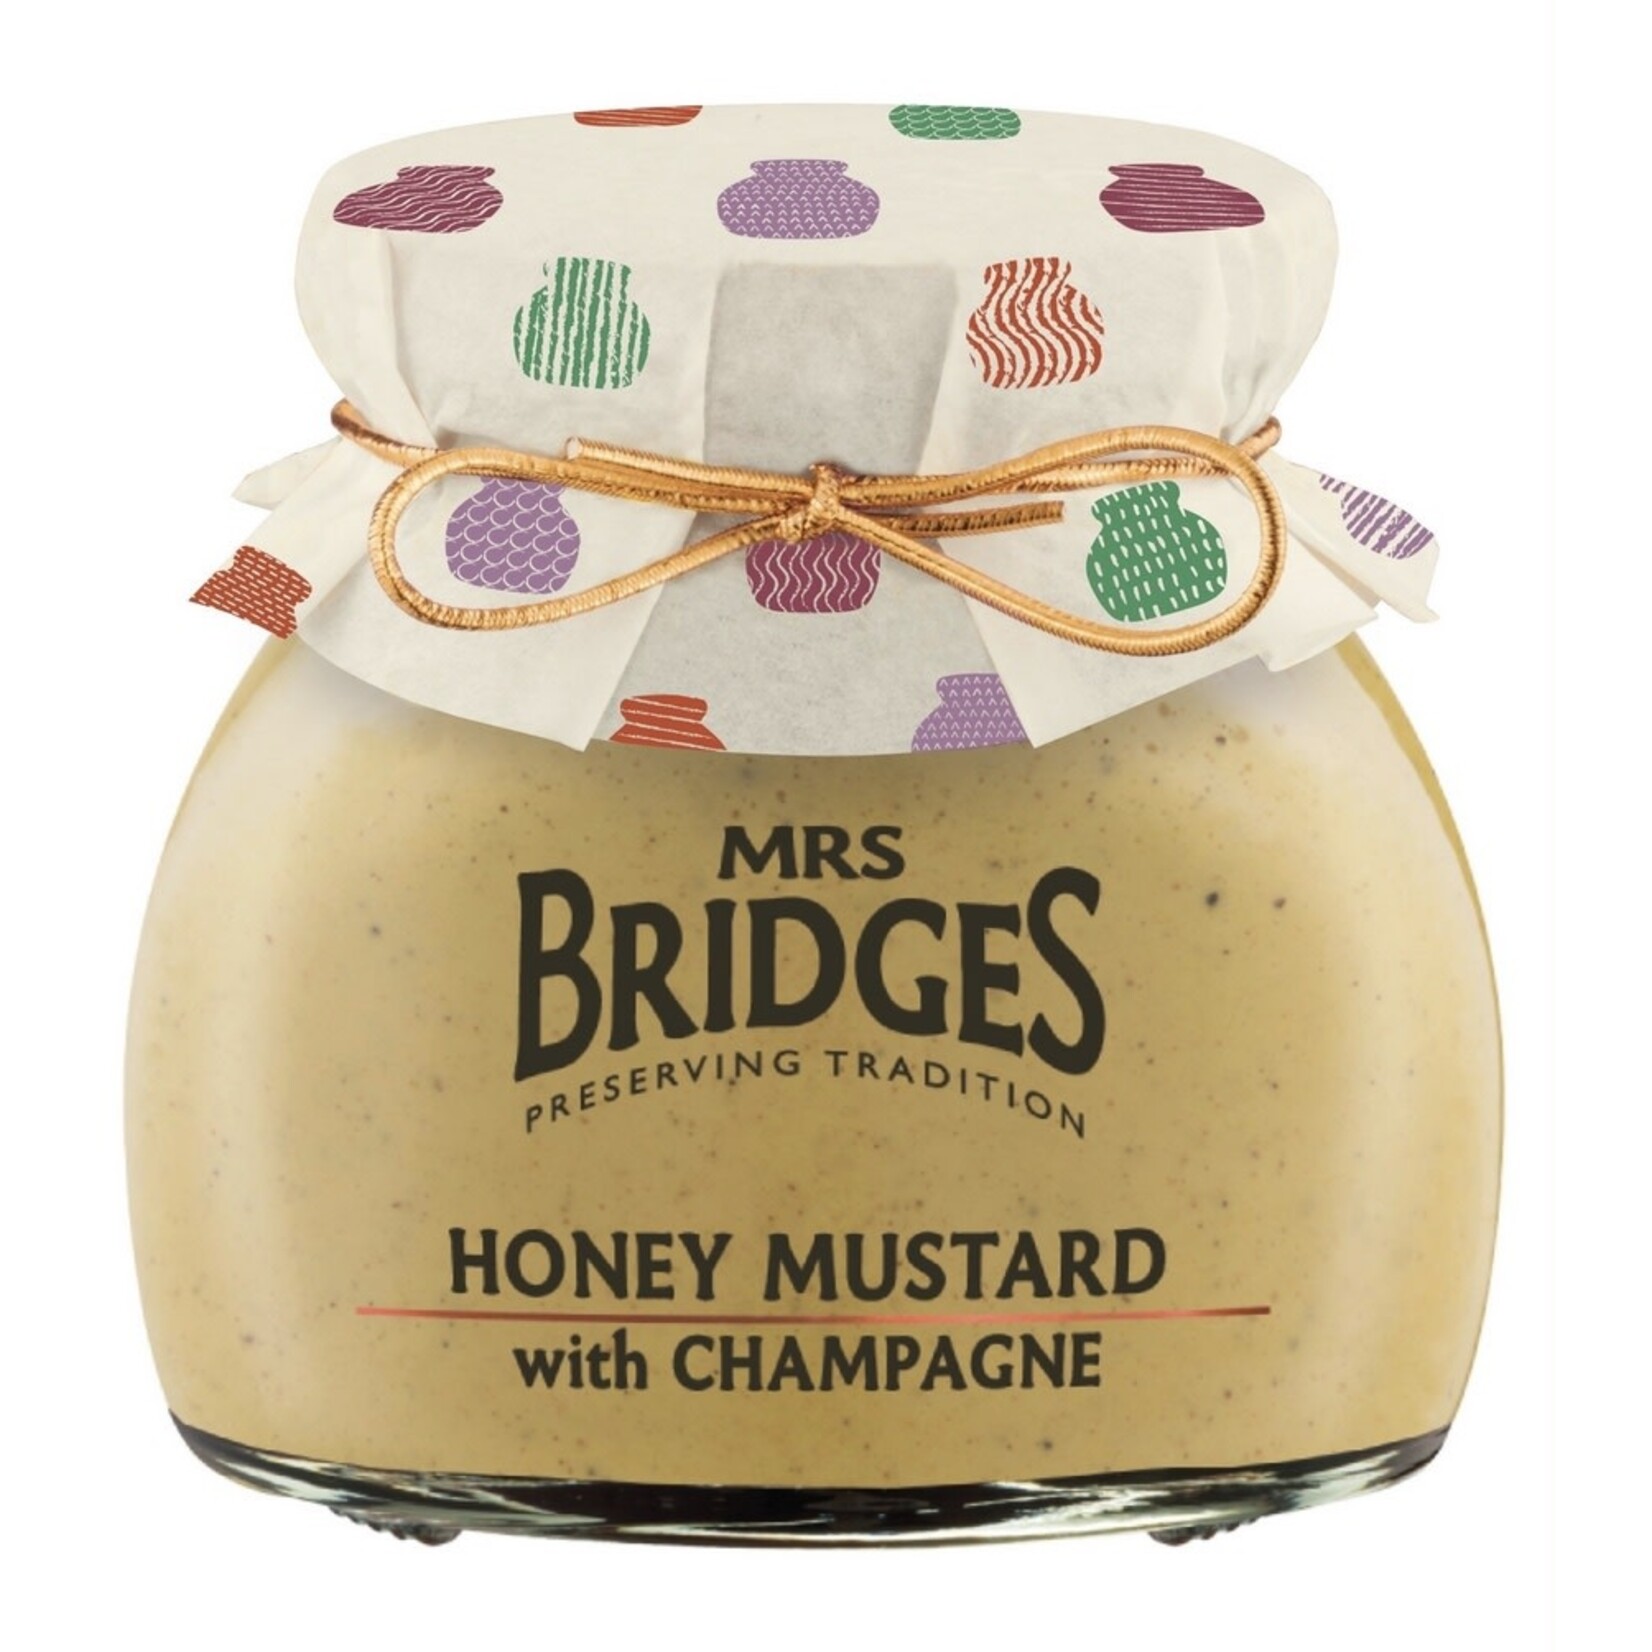 MRS BRIDGES MRS BRIDGES Honey Mustard with Champagne